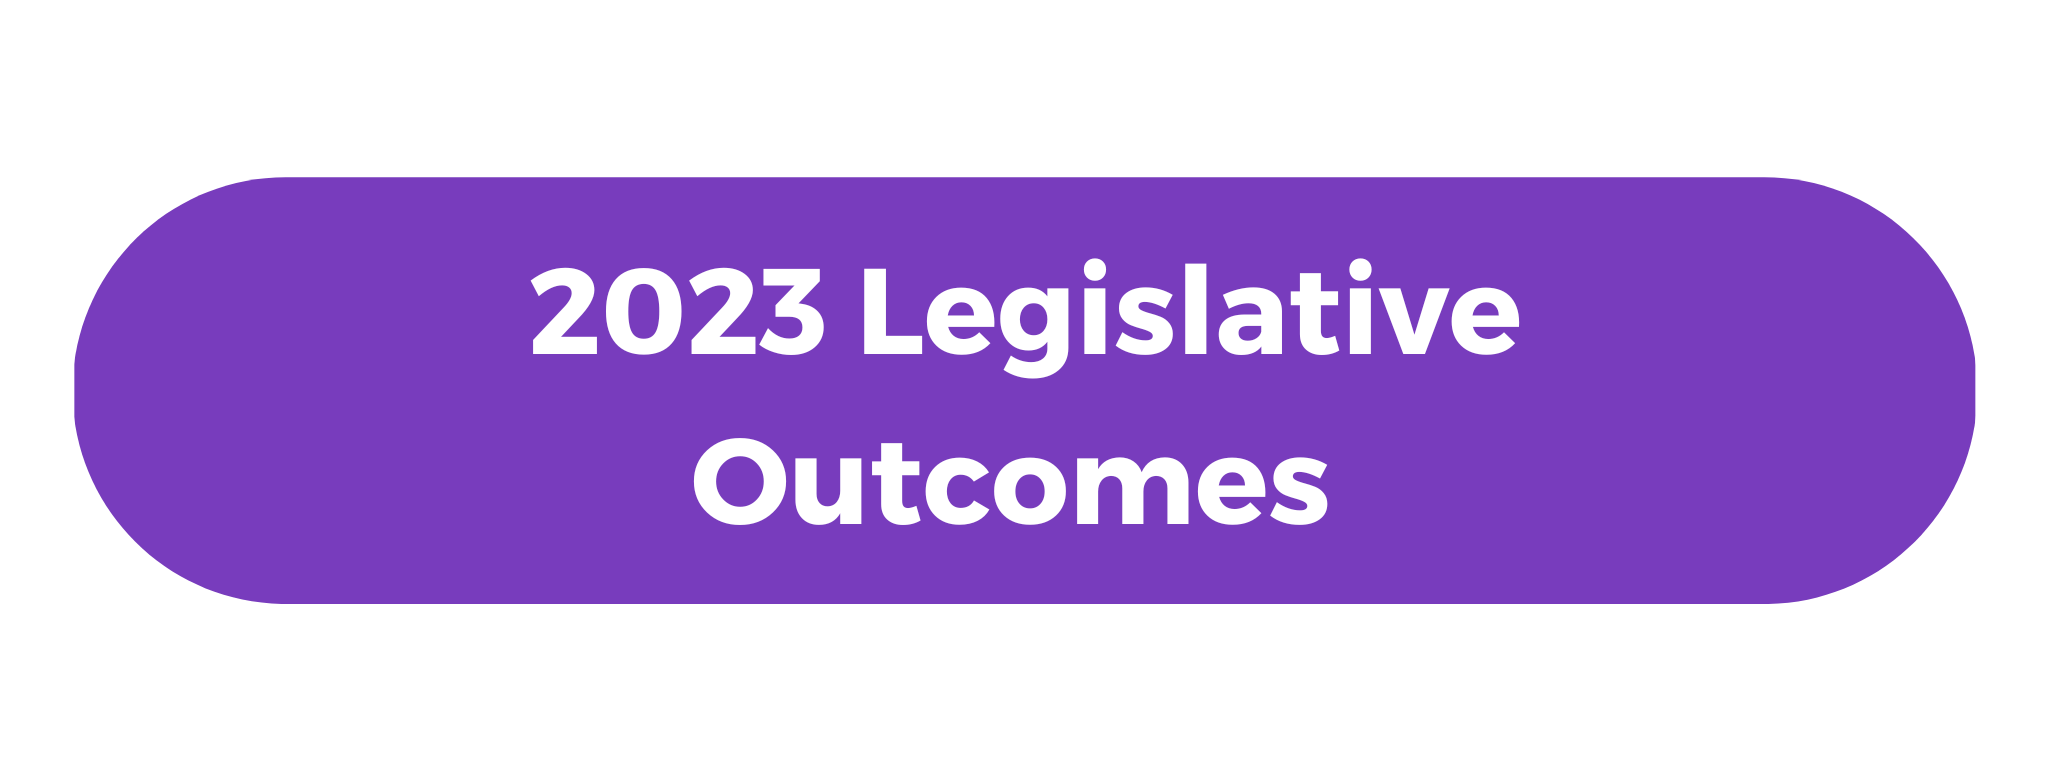 button that says "2023 legislative outcomes"